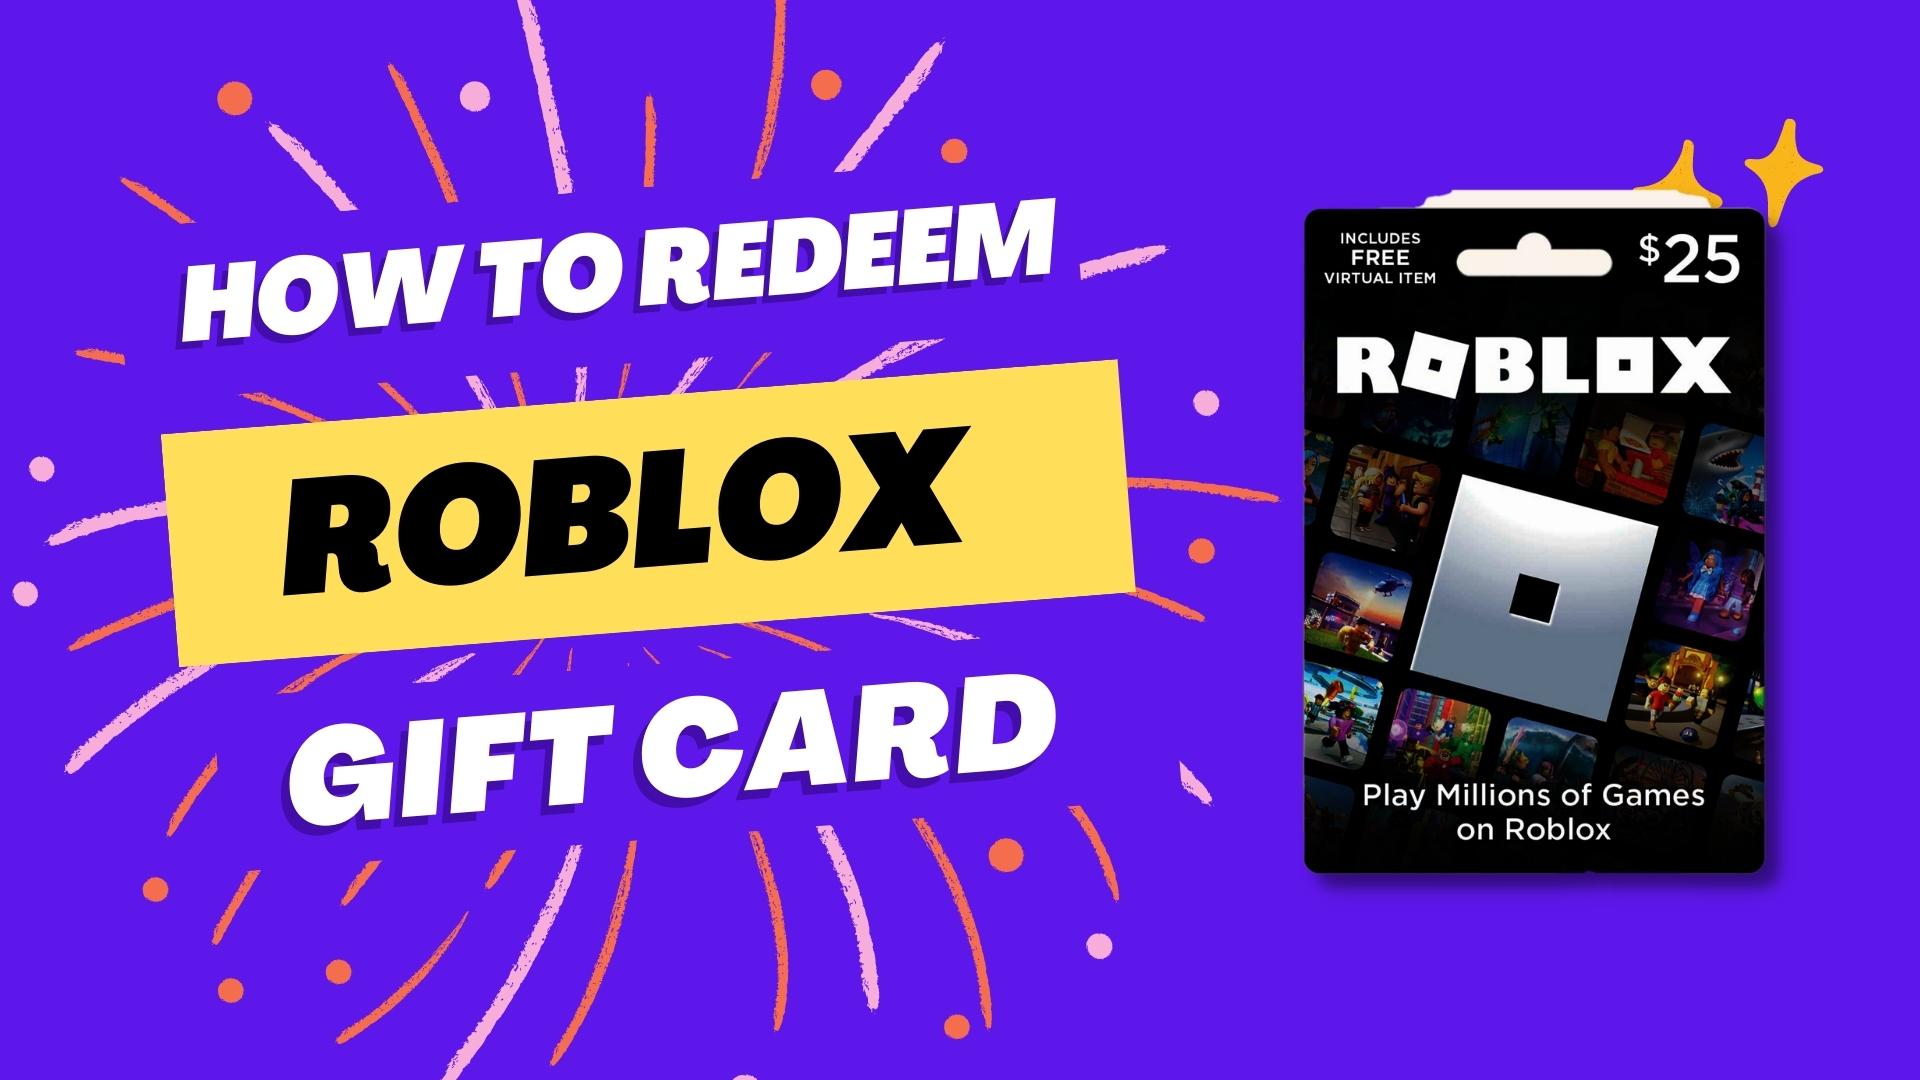 roblox gift card codes roblox gift card